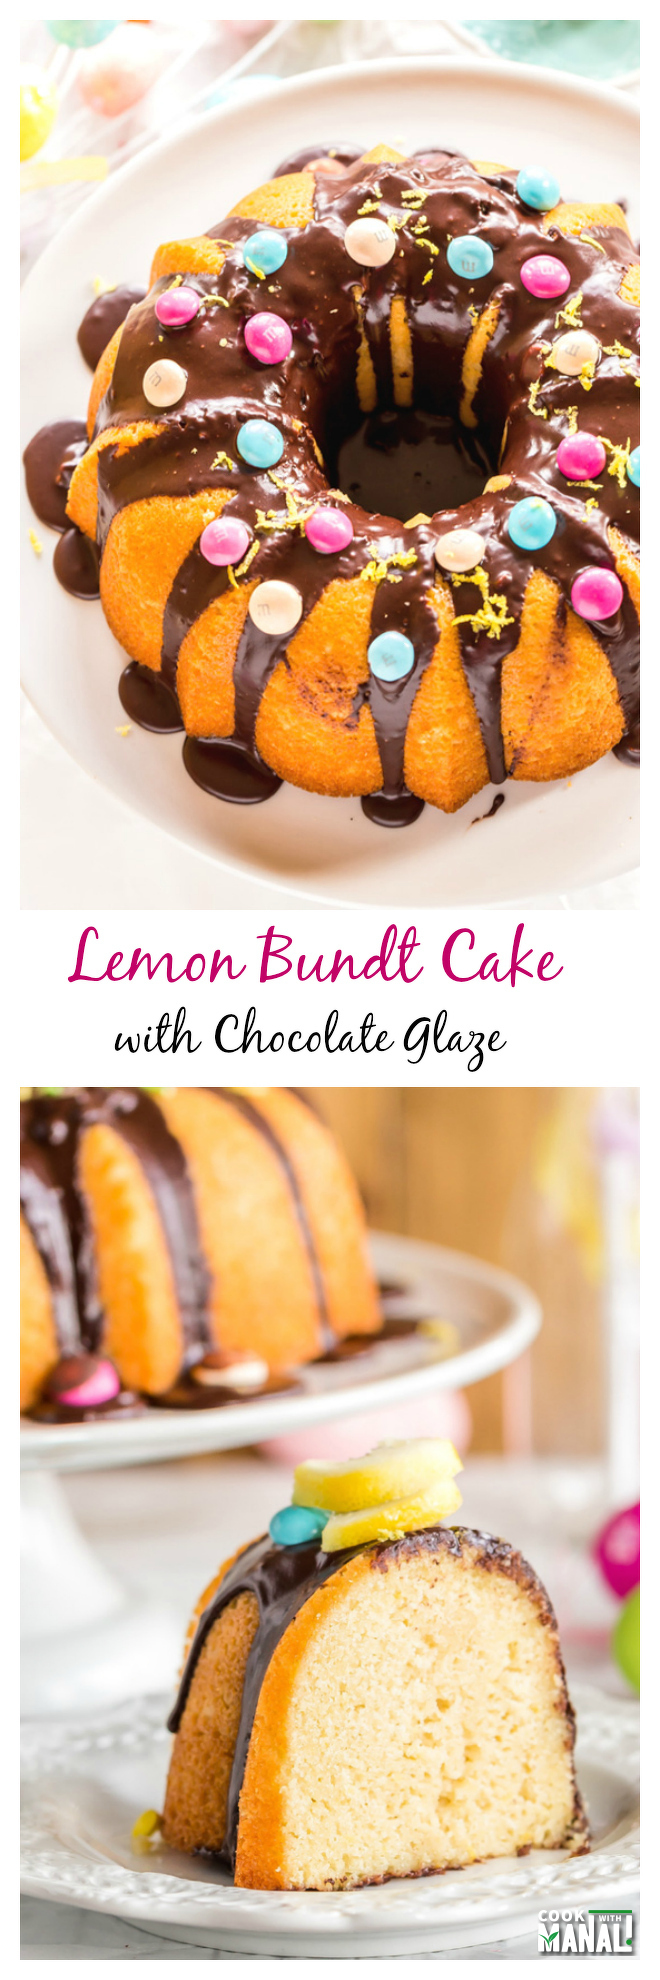 Lemon Bundt Cake with Chocolate Glaze Collage